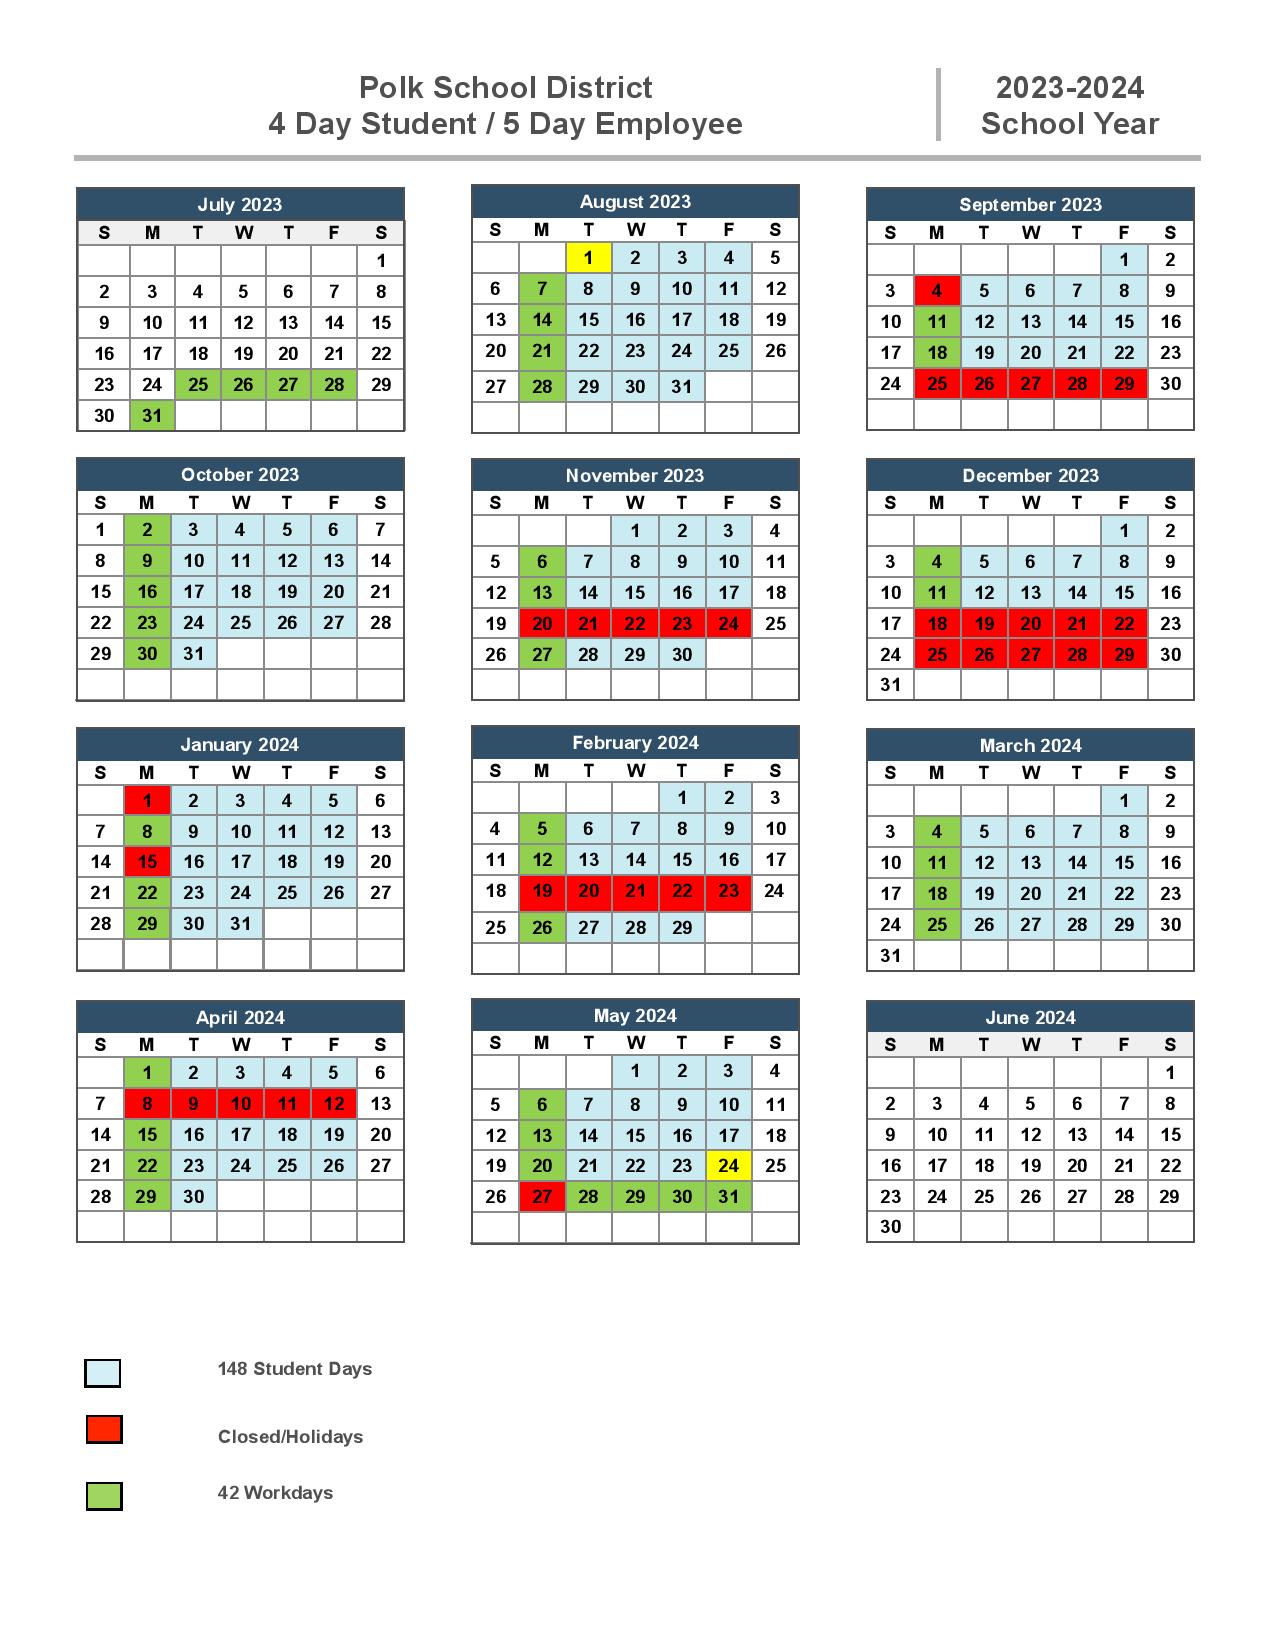 fairfax-county-calendar-2024-2025-allina-costanza